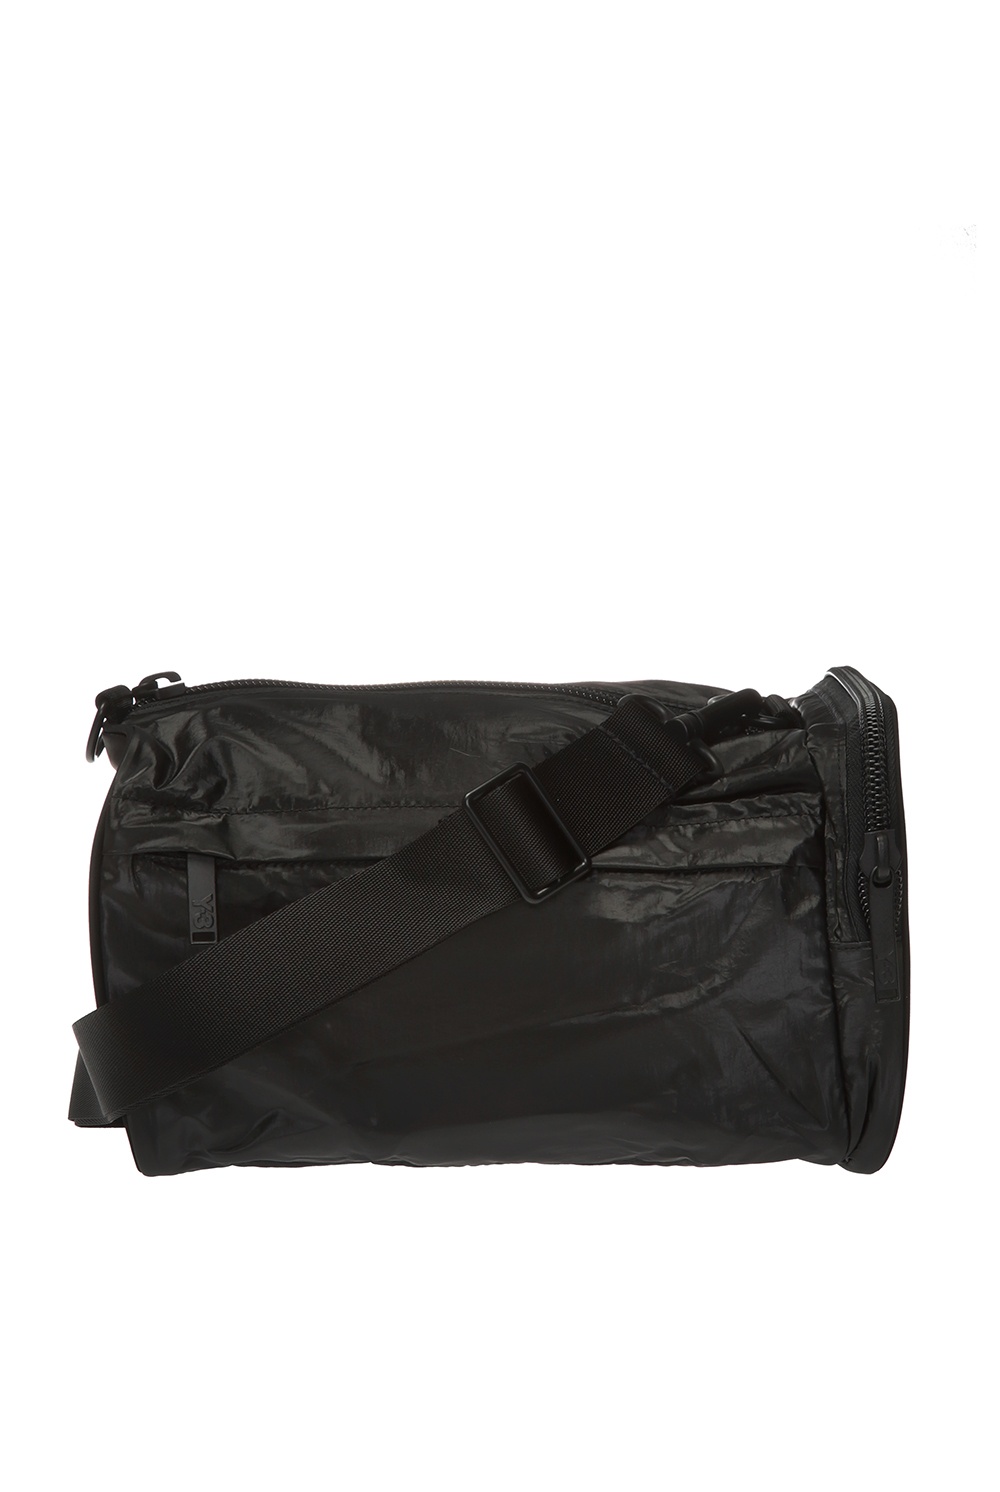 Mini Gymbag' shoulder bag Y-3 Yohji Yamamoto - Vitkac Singapore